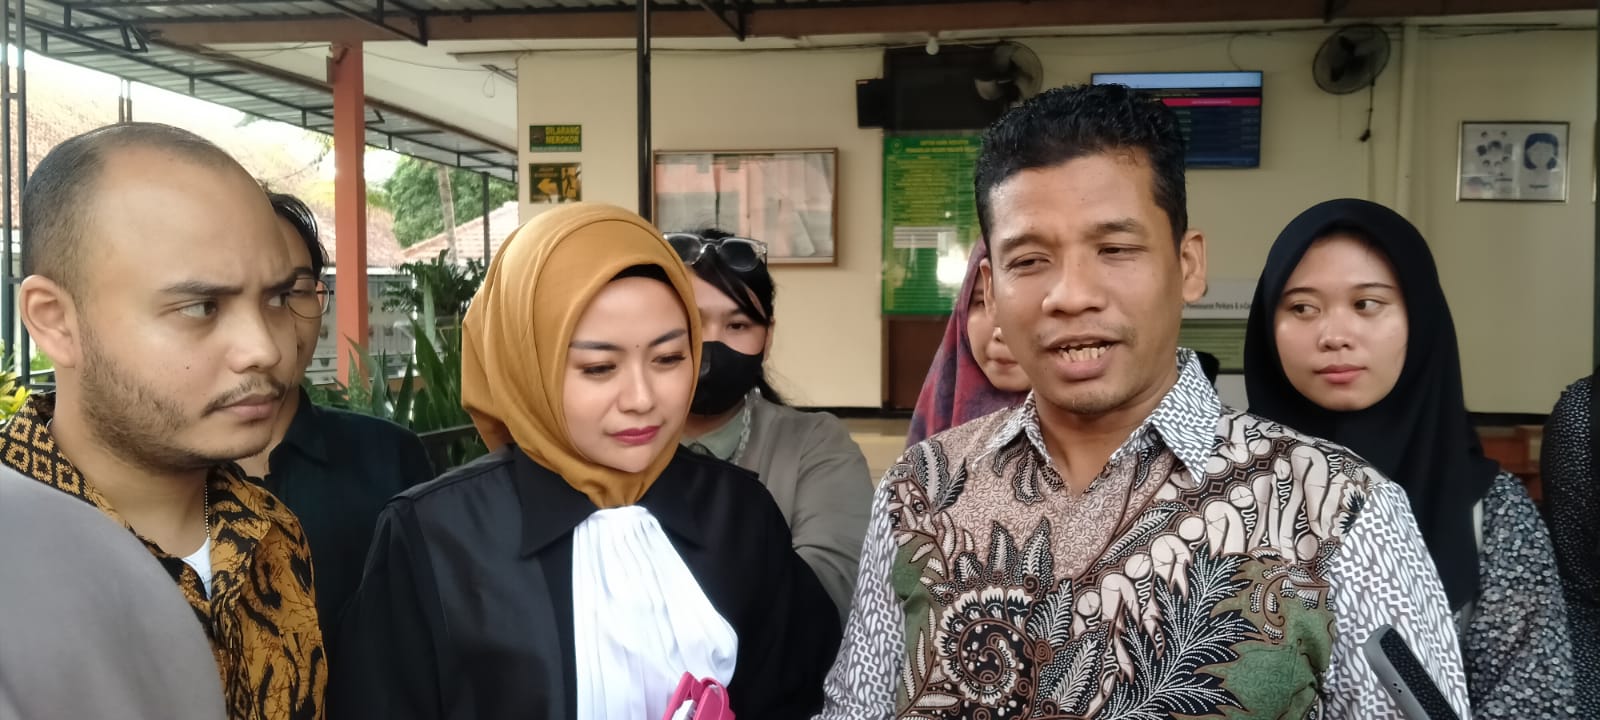 Penganiaya Anak Selebgram Kota Malang Dituntut 4 Tahun, PH: Terlalu Berat